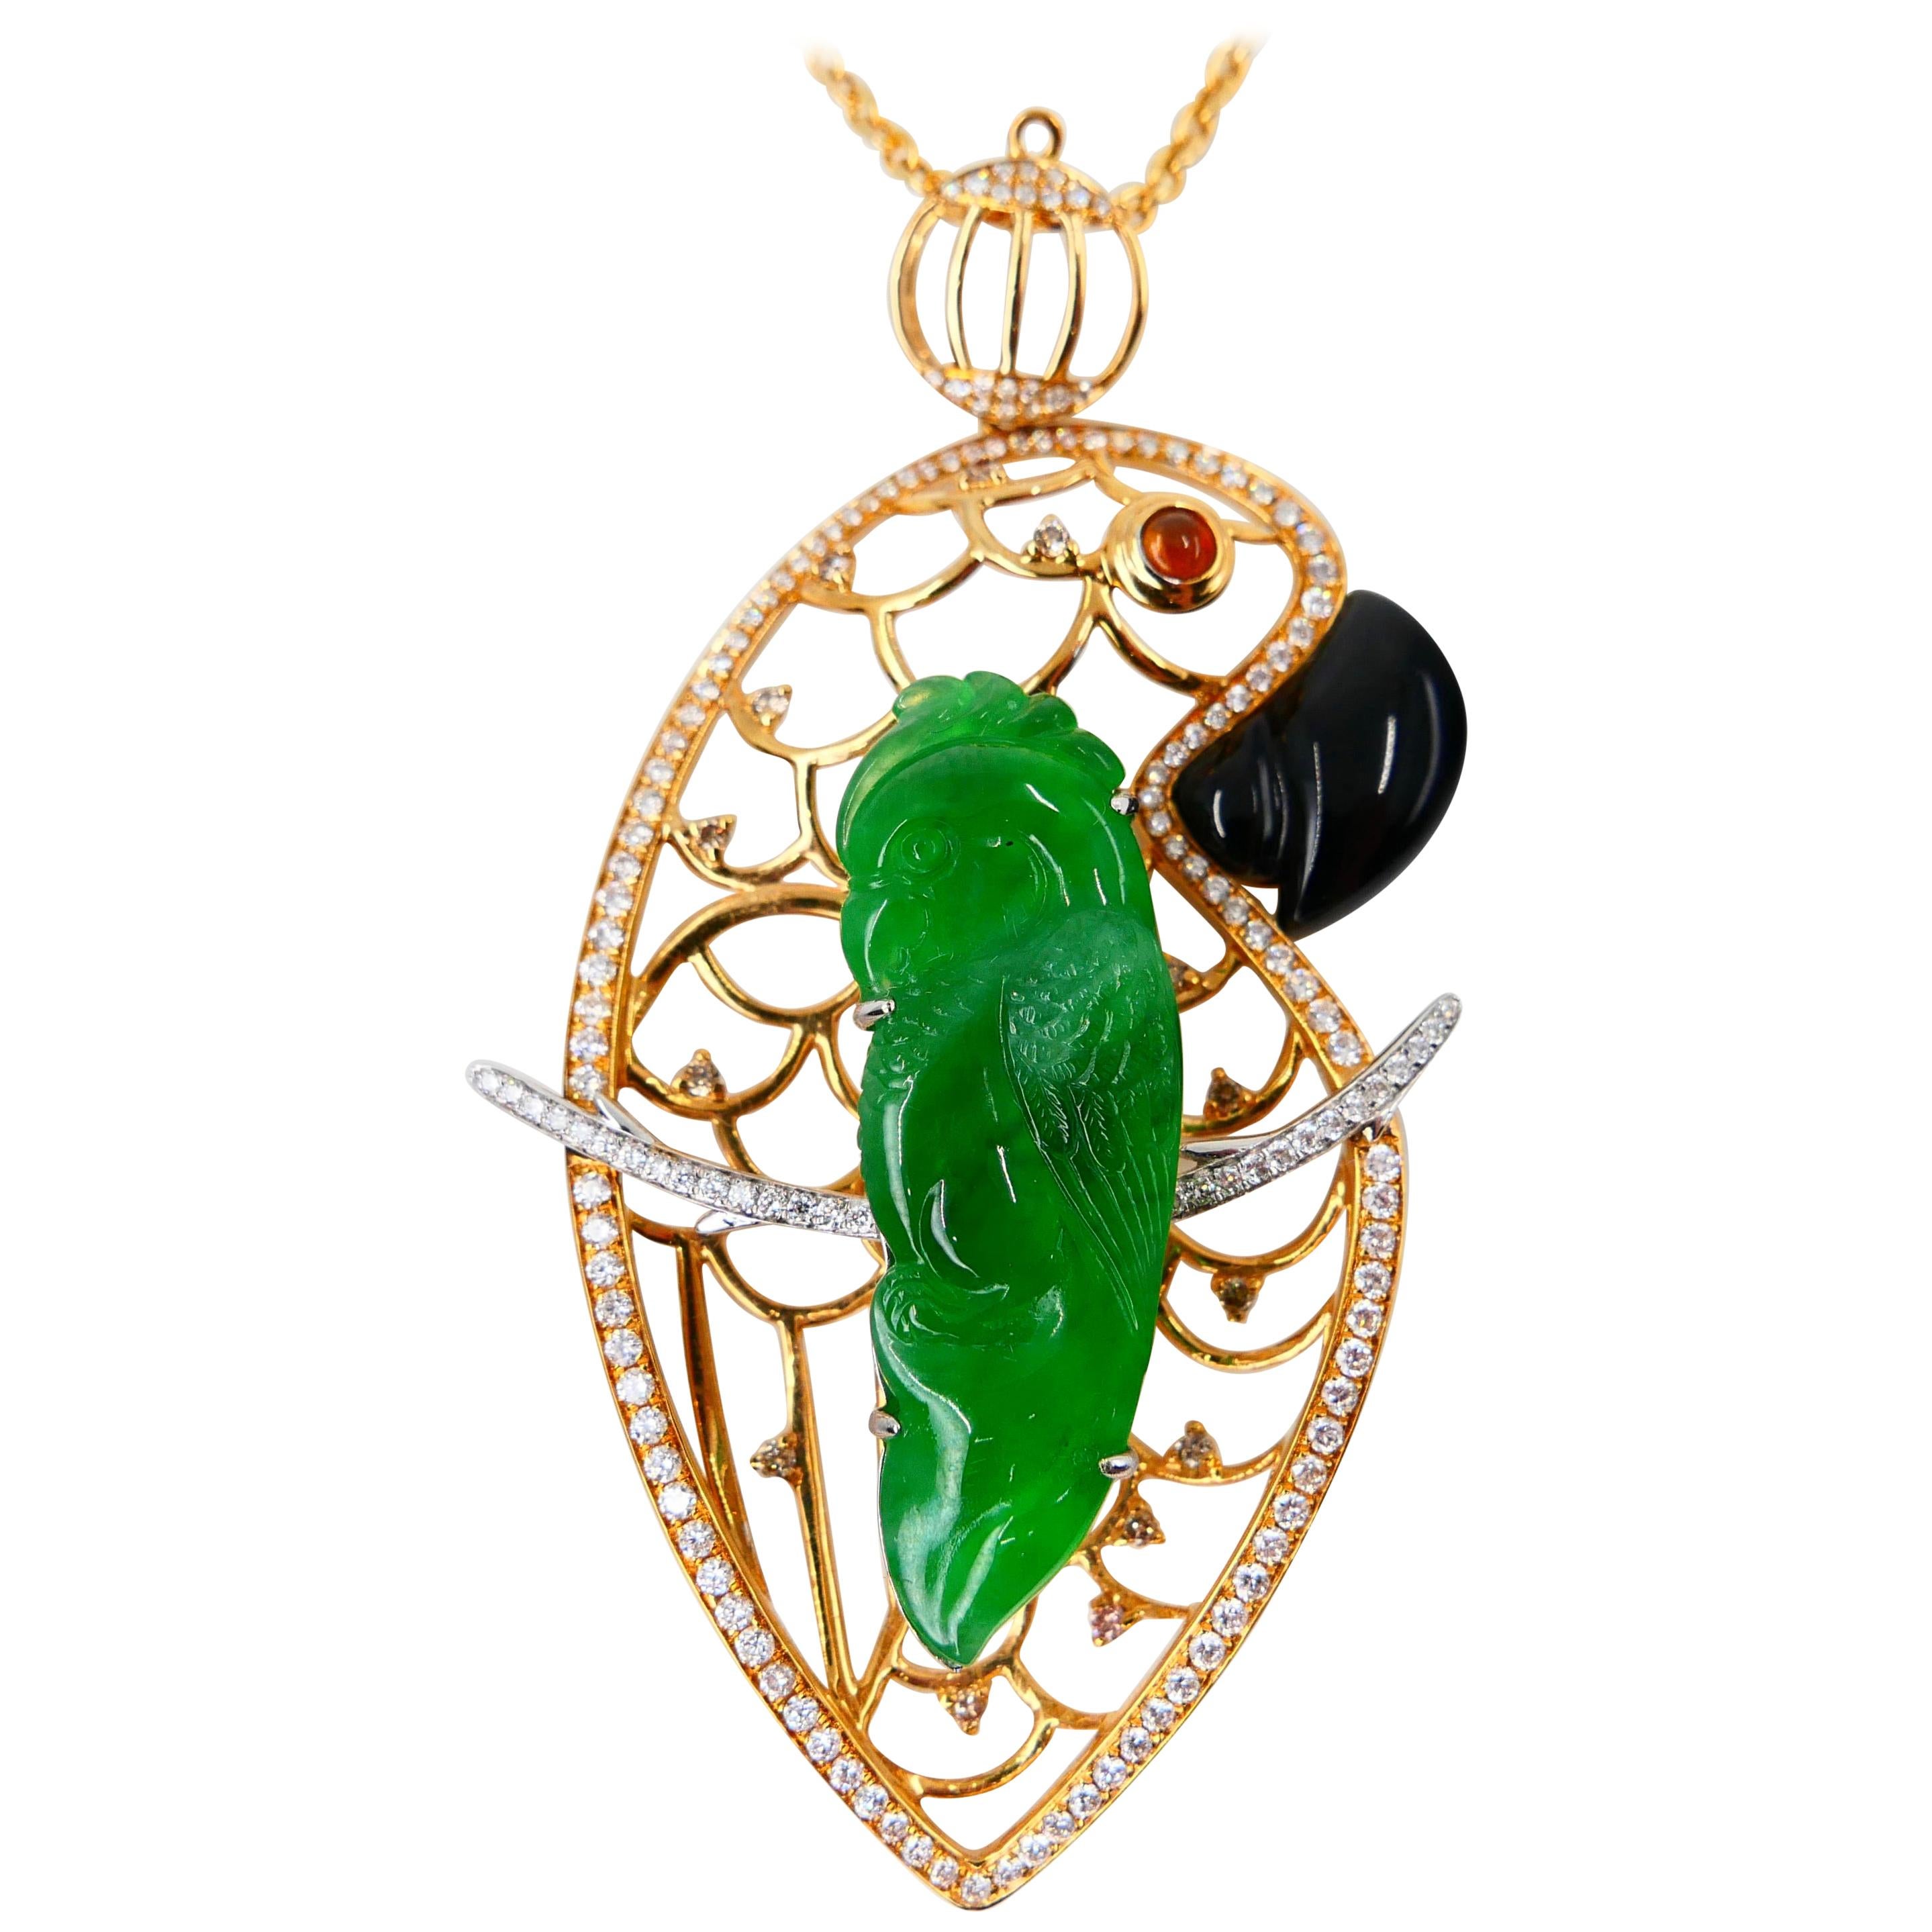 Pendentif perroquet en jade certifié de type A, en jade et diamants, de couleur verte Vivid